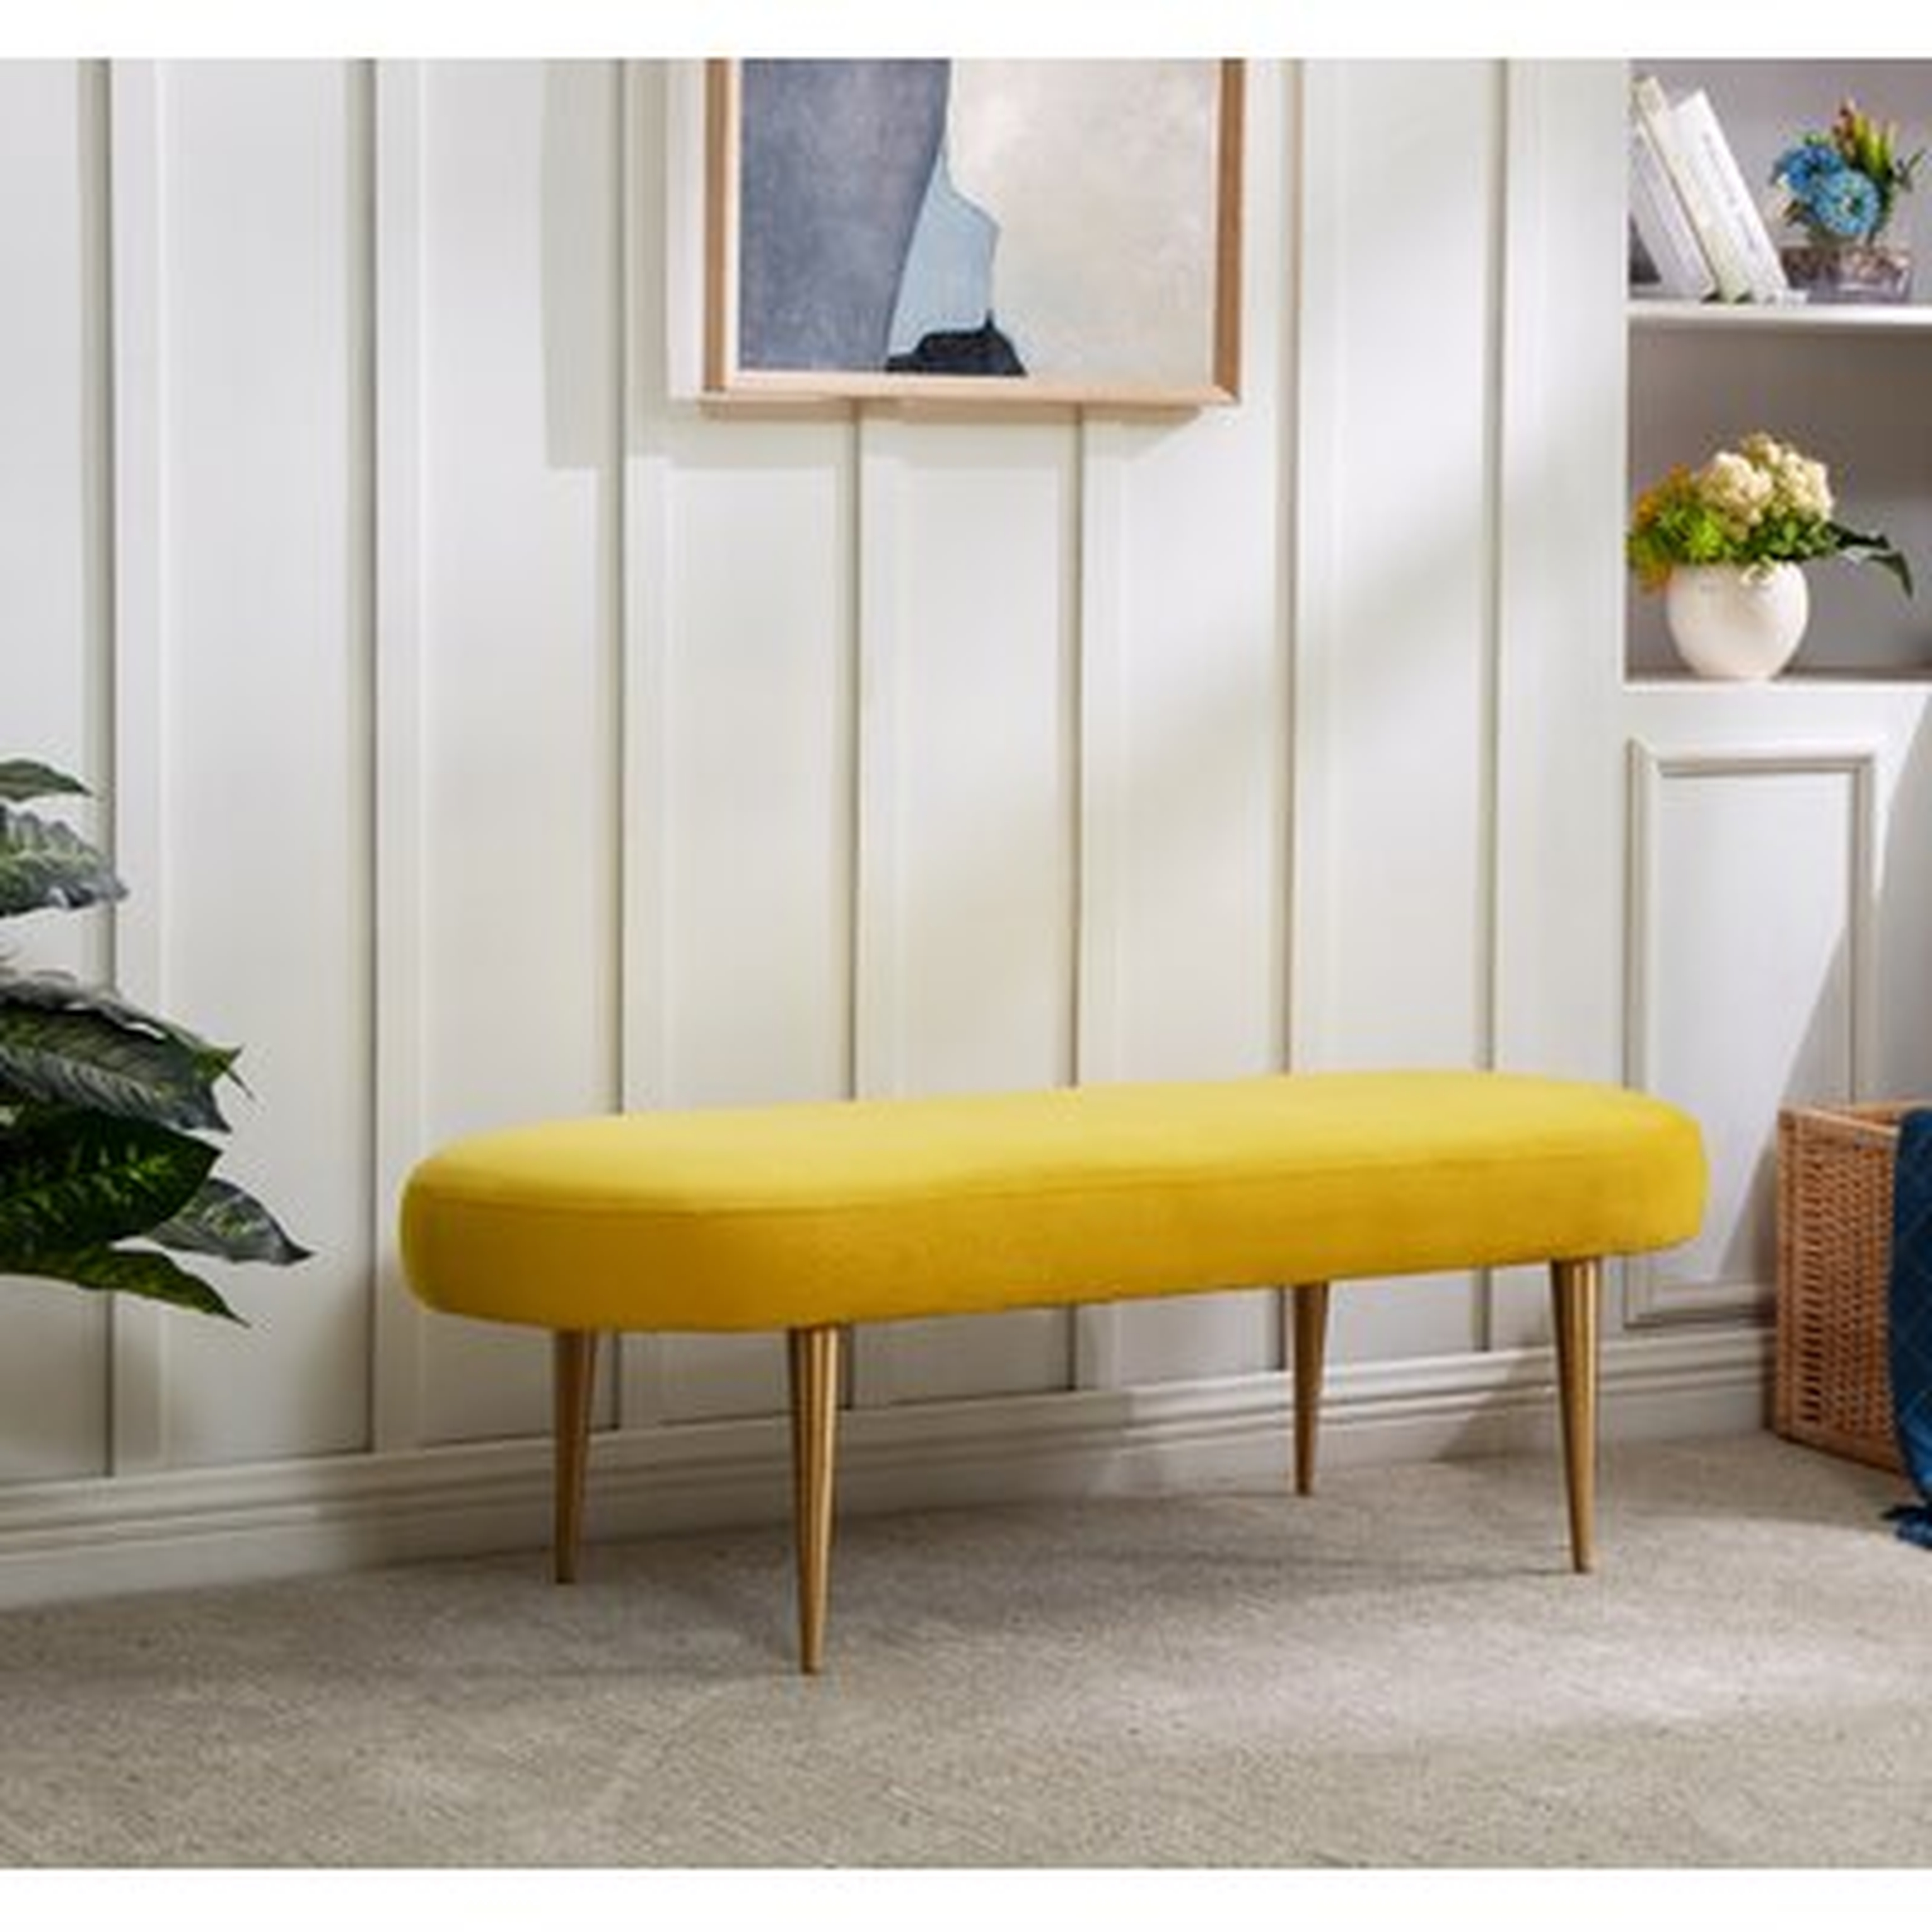 Skye Upholstered Bench - Wayfair